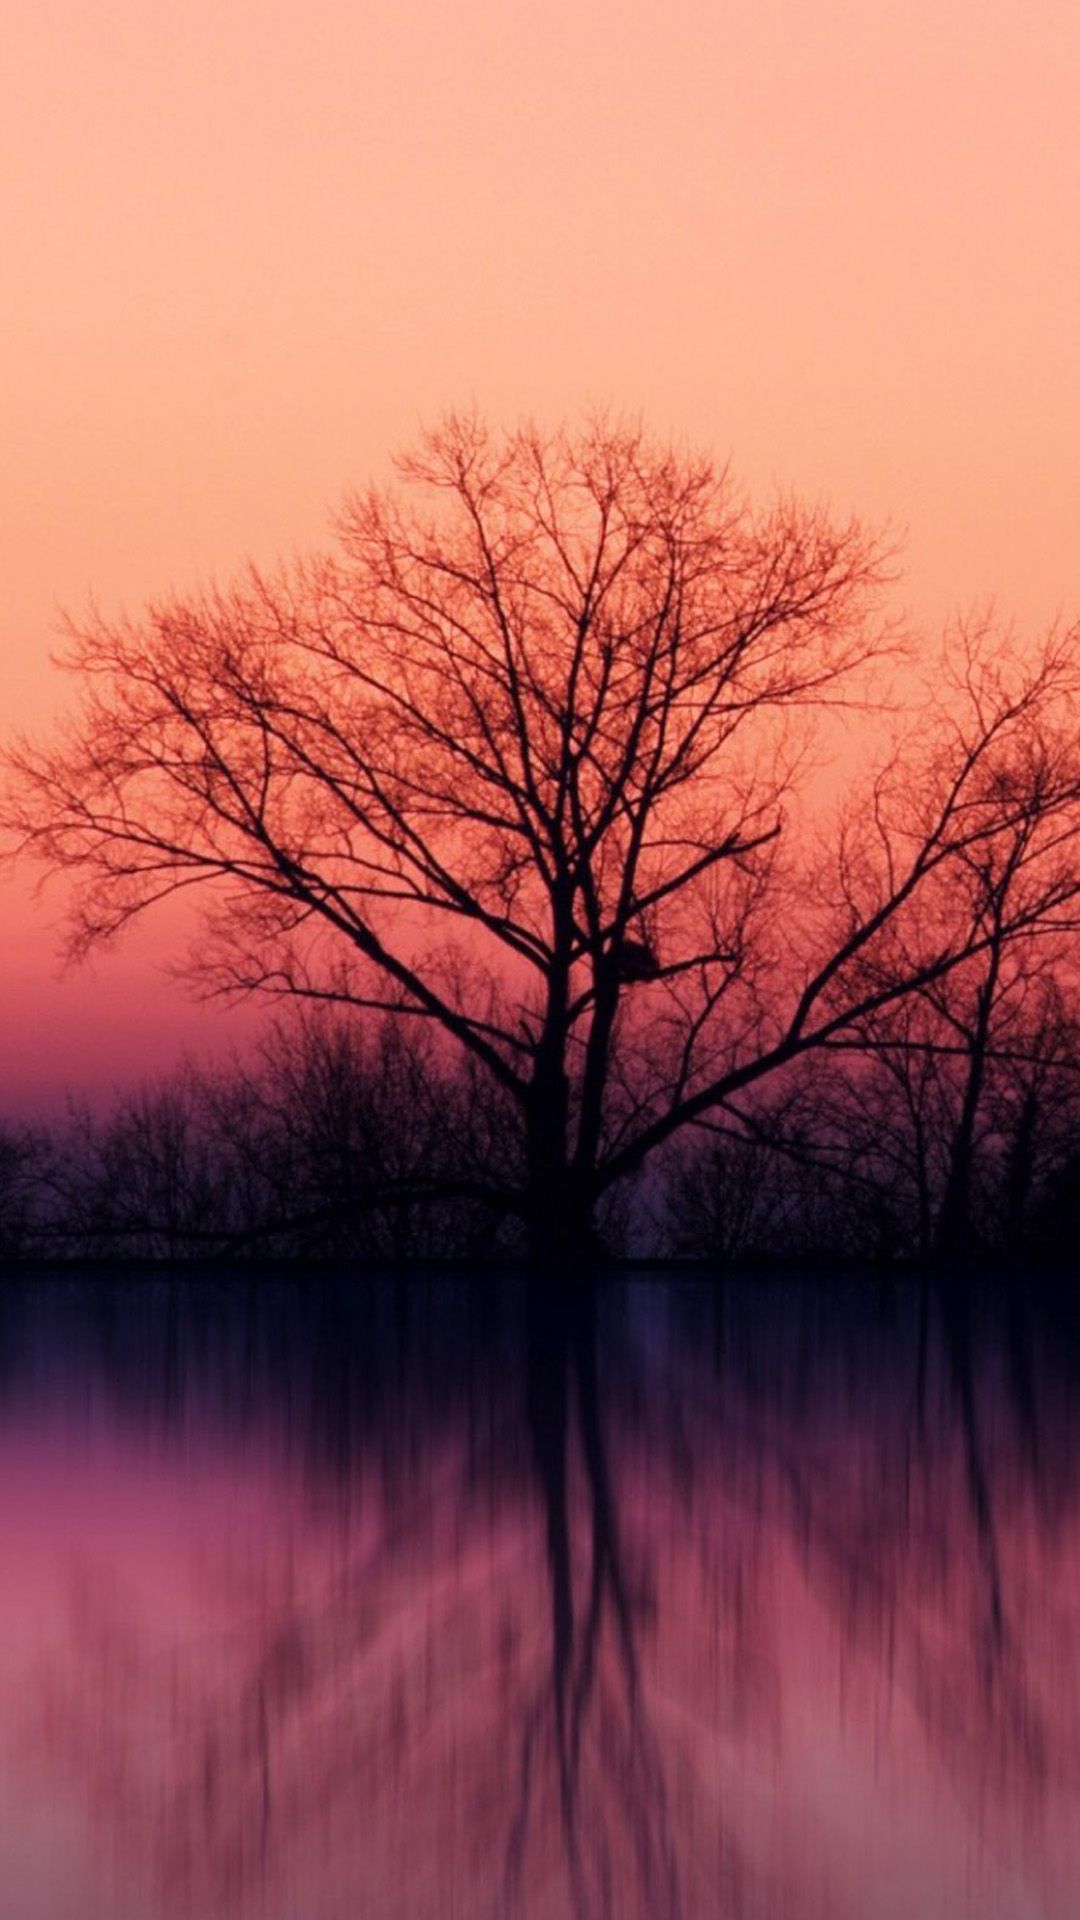 Stillness Calm Lake Sunset Landscape iPhone 8 Wallpaper Free Download